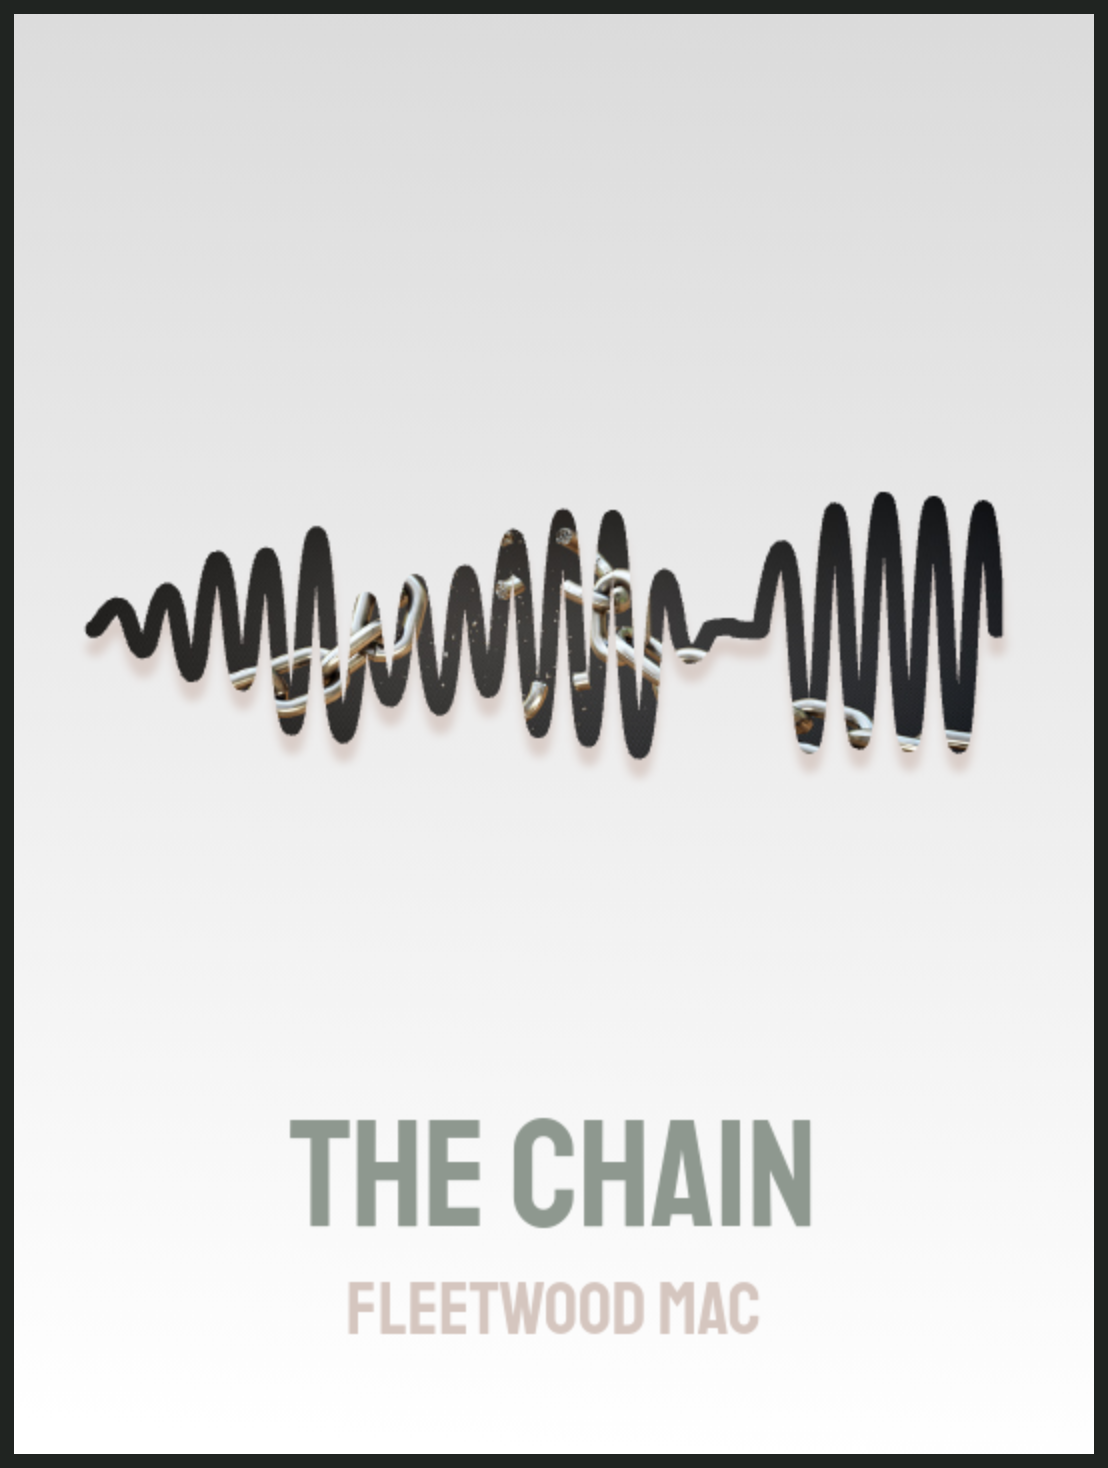 Fleetwood Mac - The Chain Printawave Unique Design #1686311100830